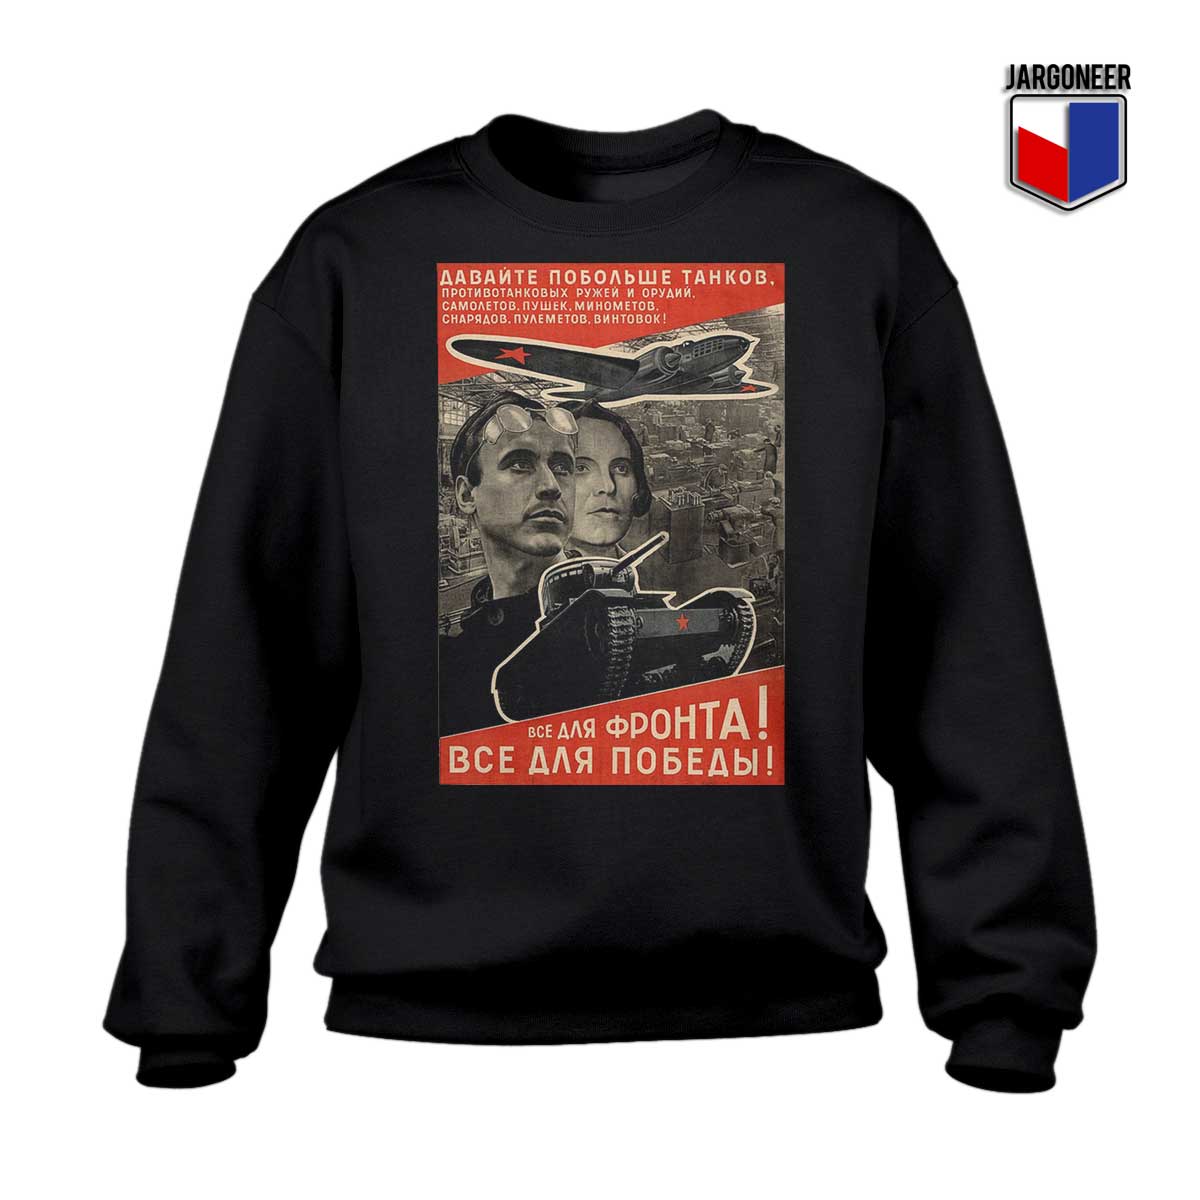 USSR WWII Propaganda Sweatshirt - Shop Unique Graphic Cool Shirt Designs